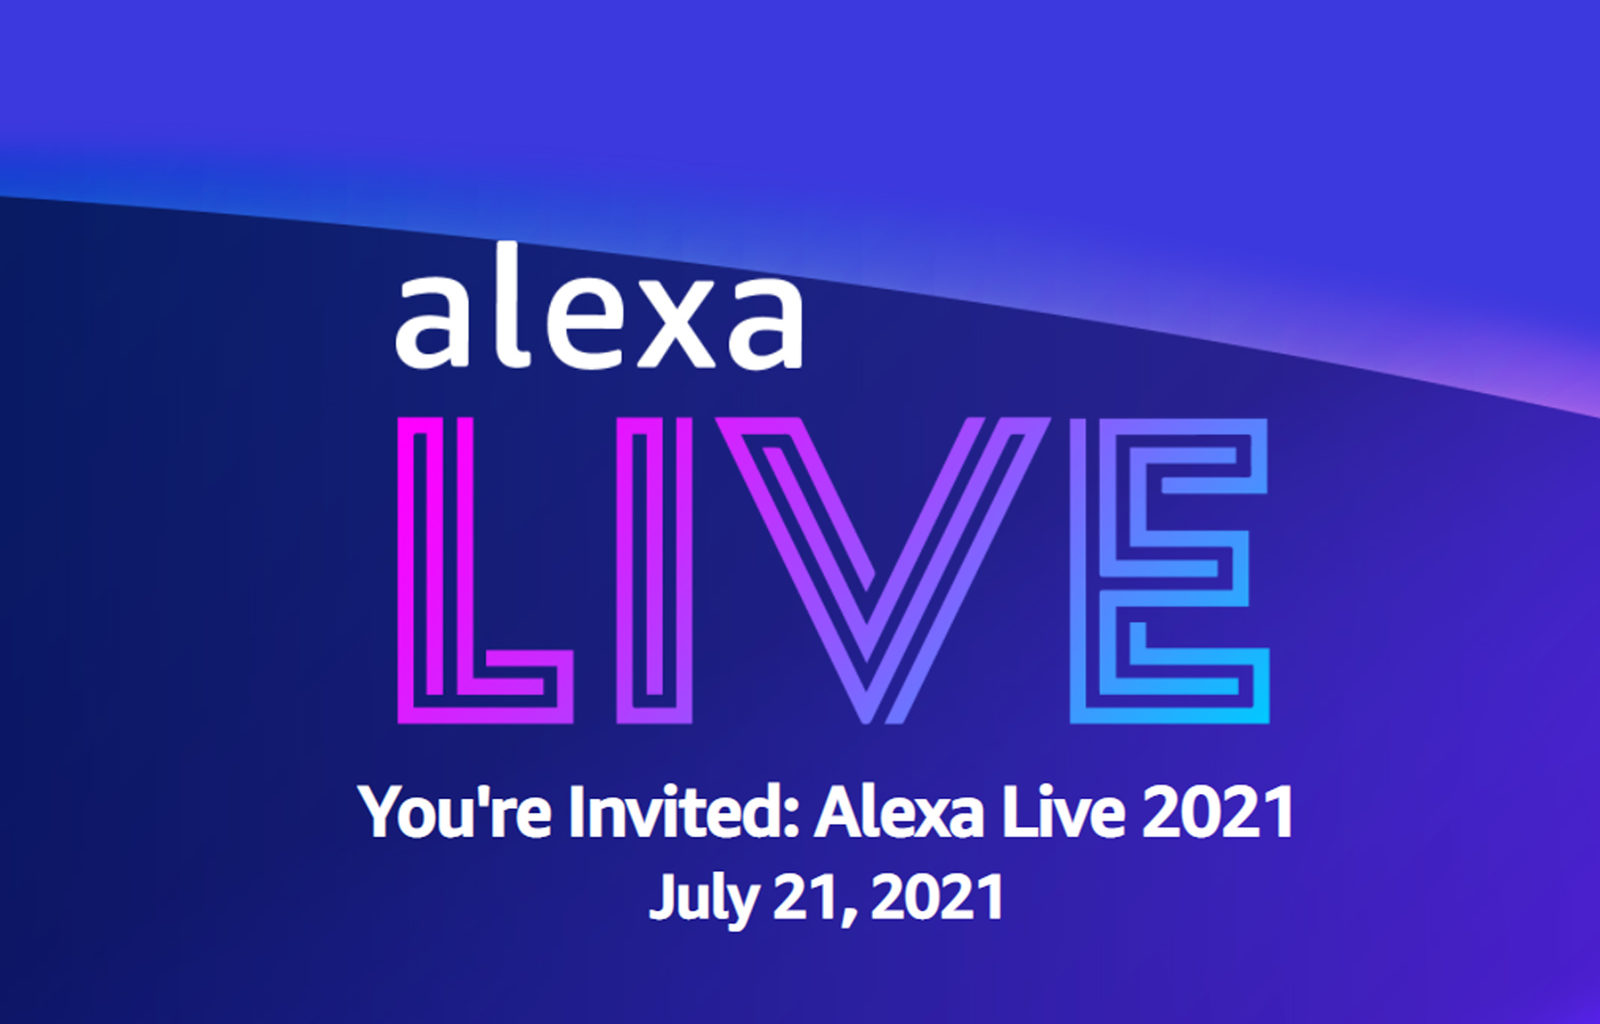 Alexa Live